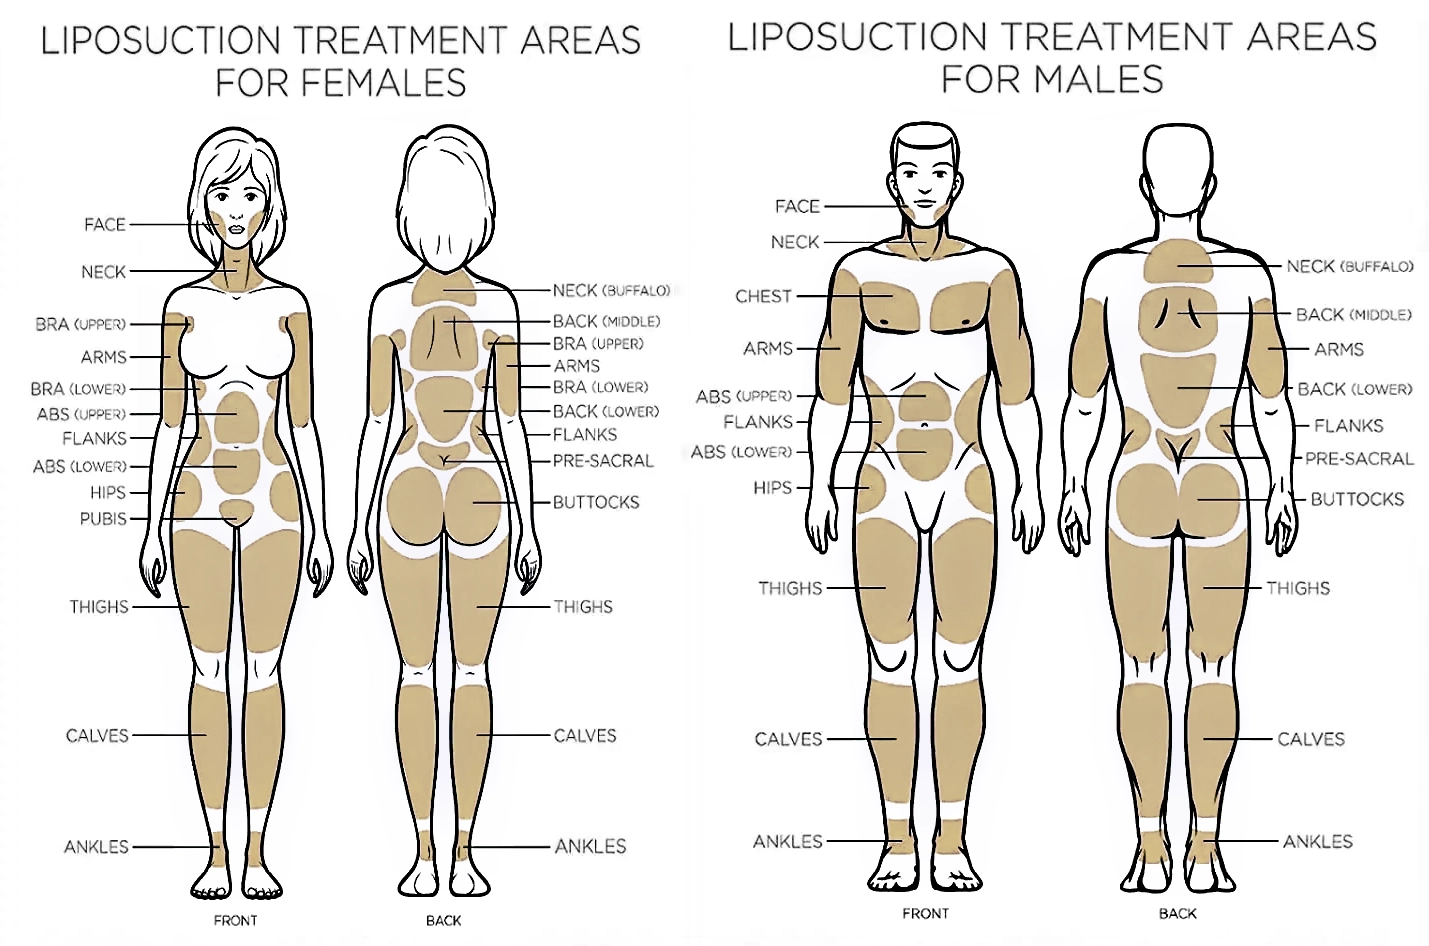 Liposuction 